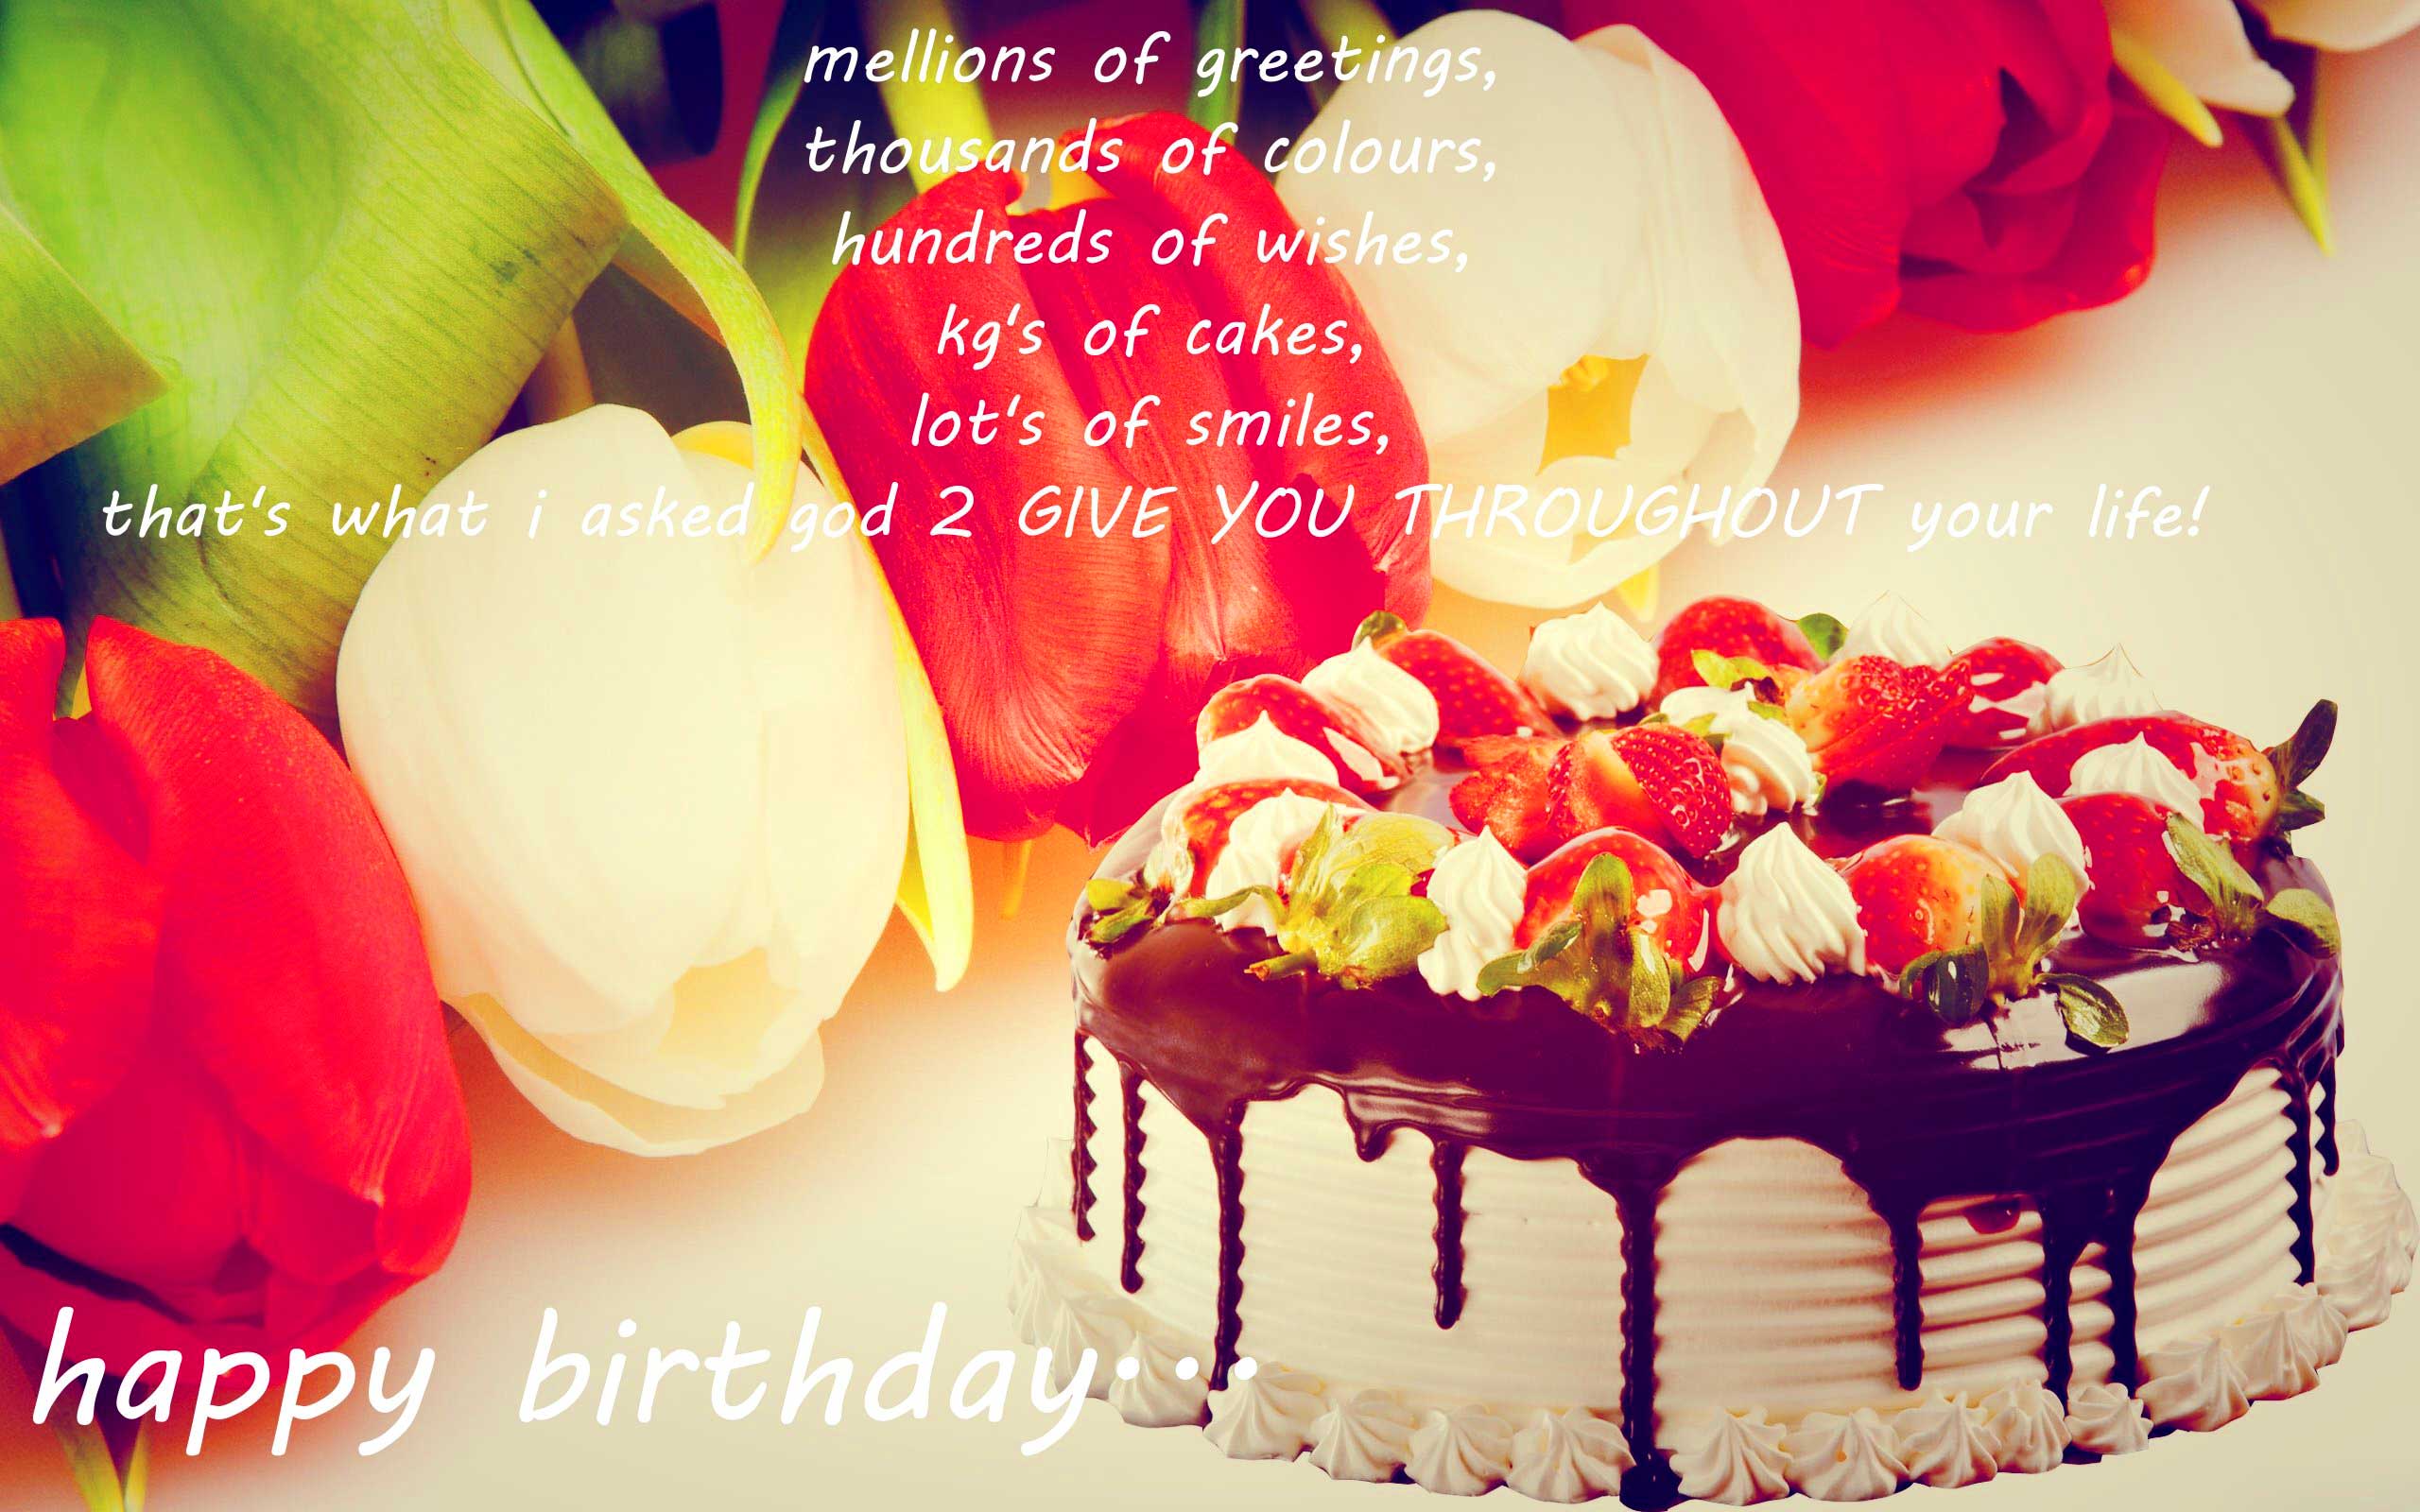 Happy Birthday Cake Image Picture Photo Pics Wallpaper Download